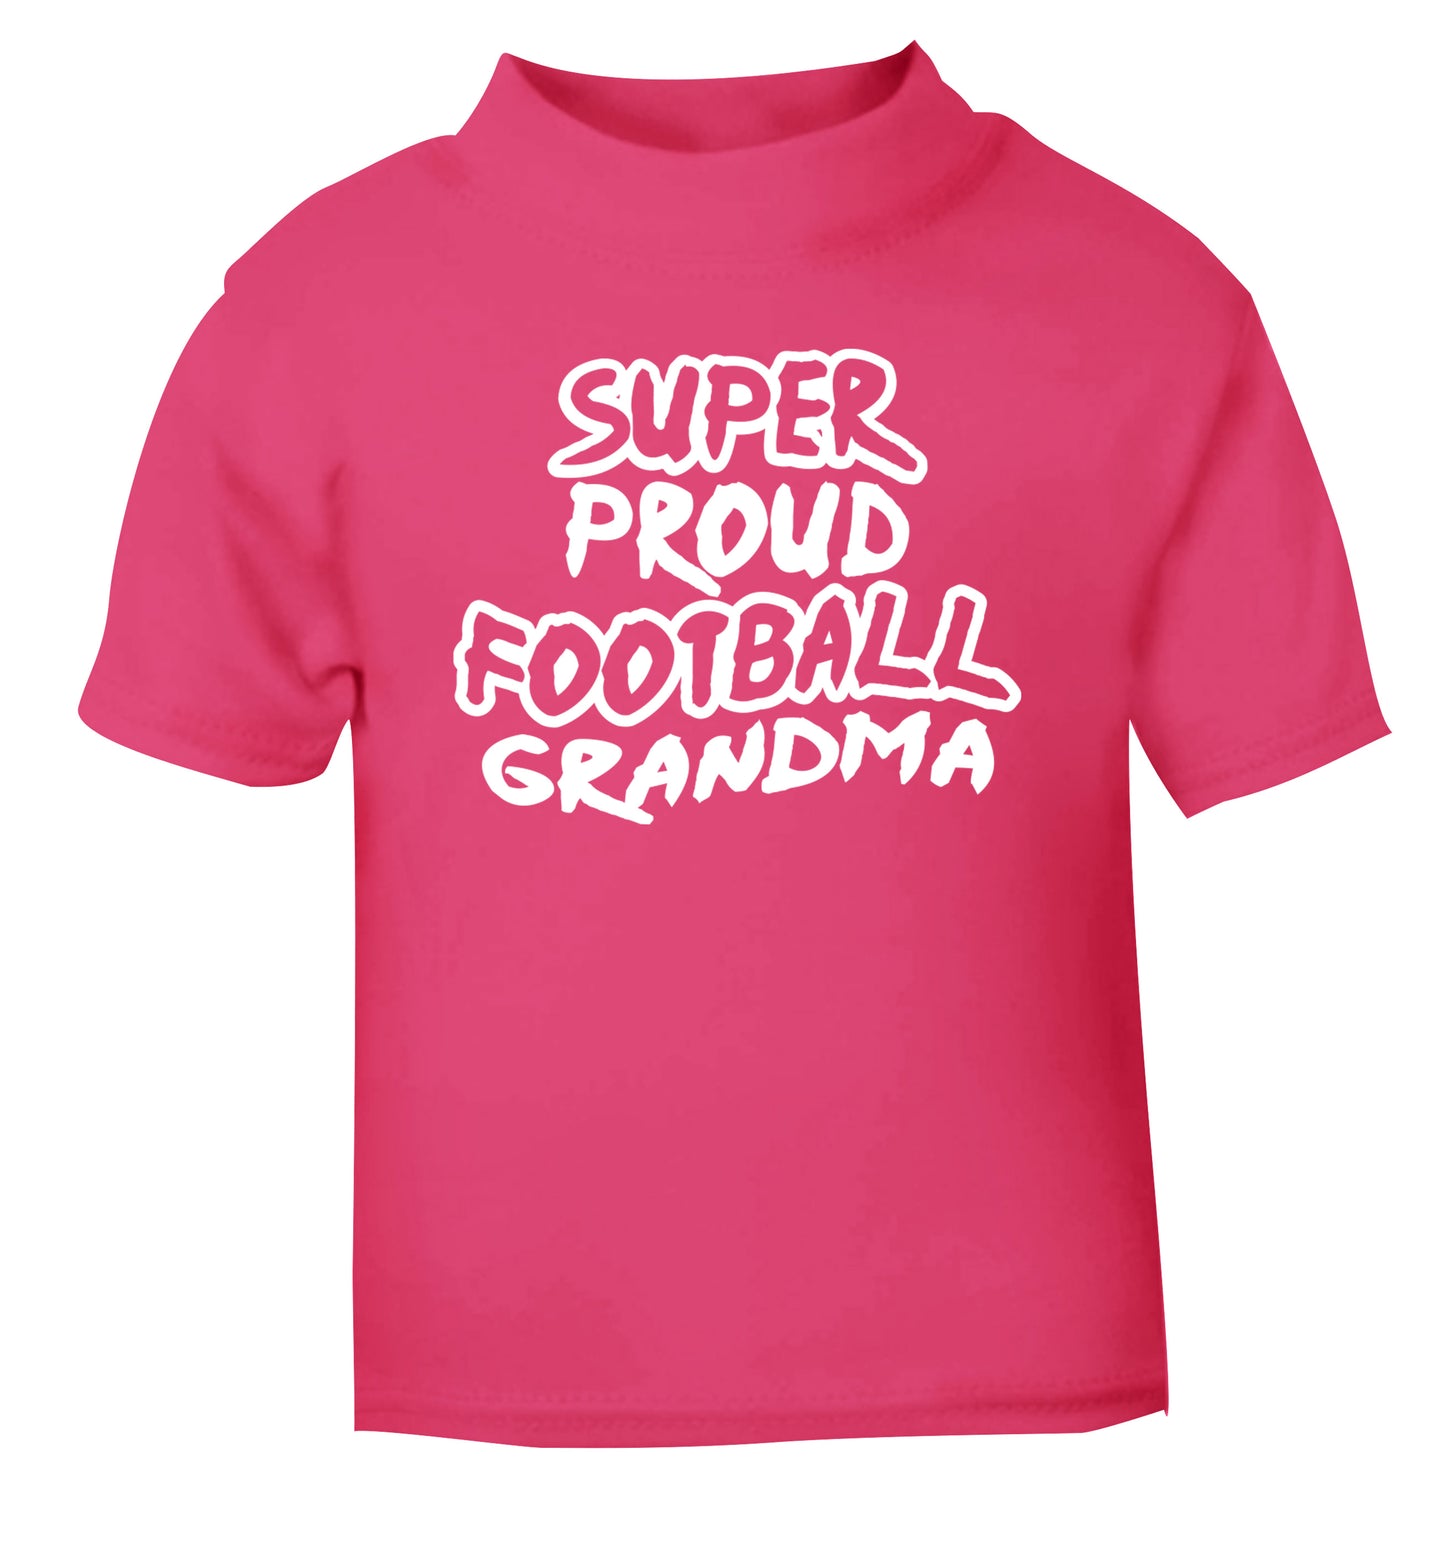 Super proud football grandma pink Baby Toddler Tshirt 2 Years